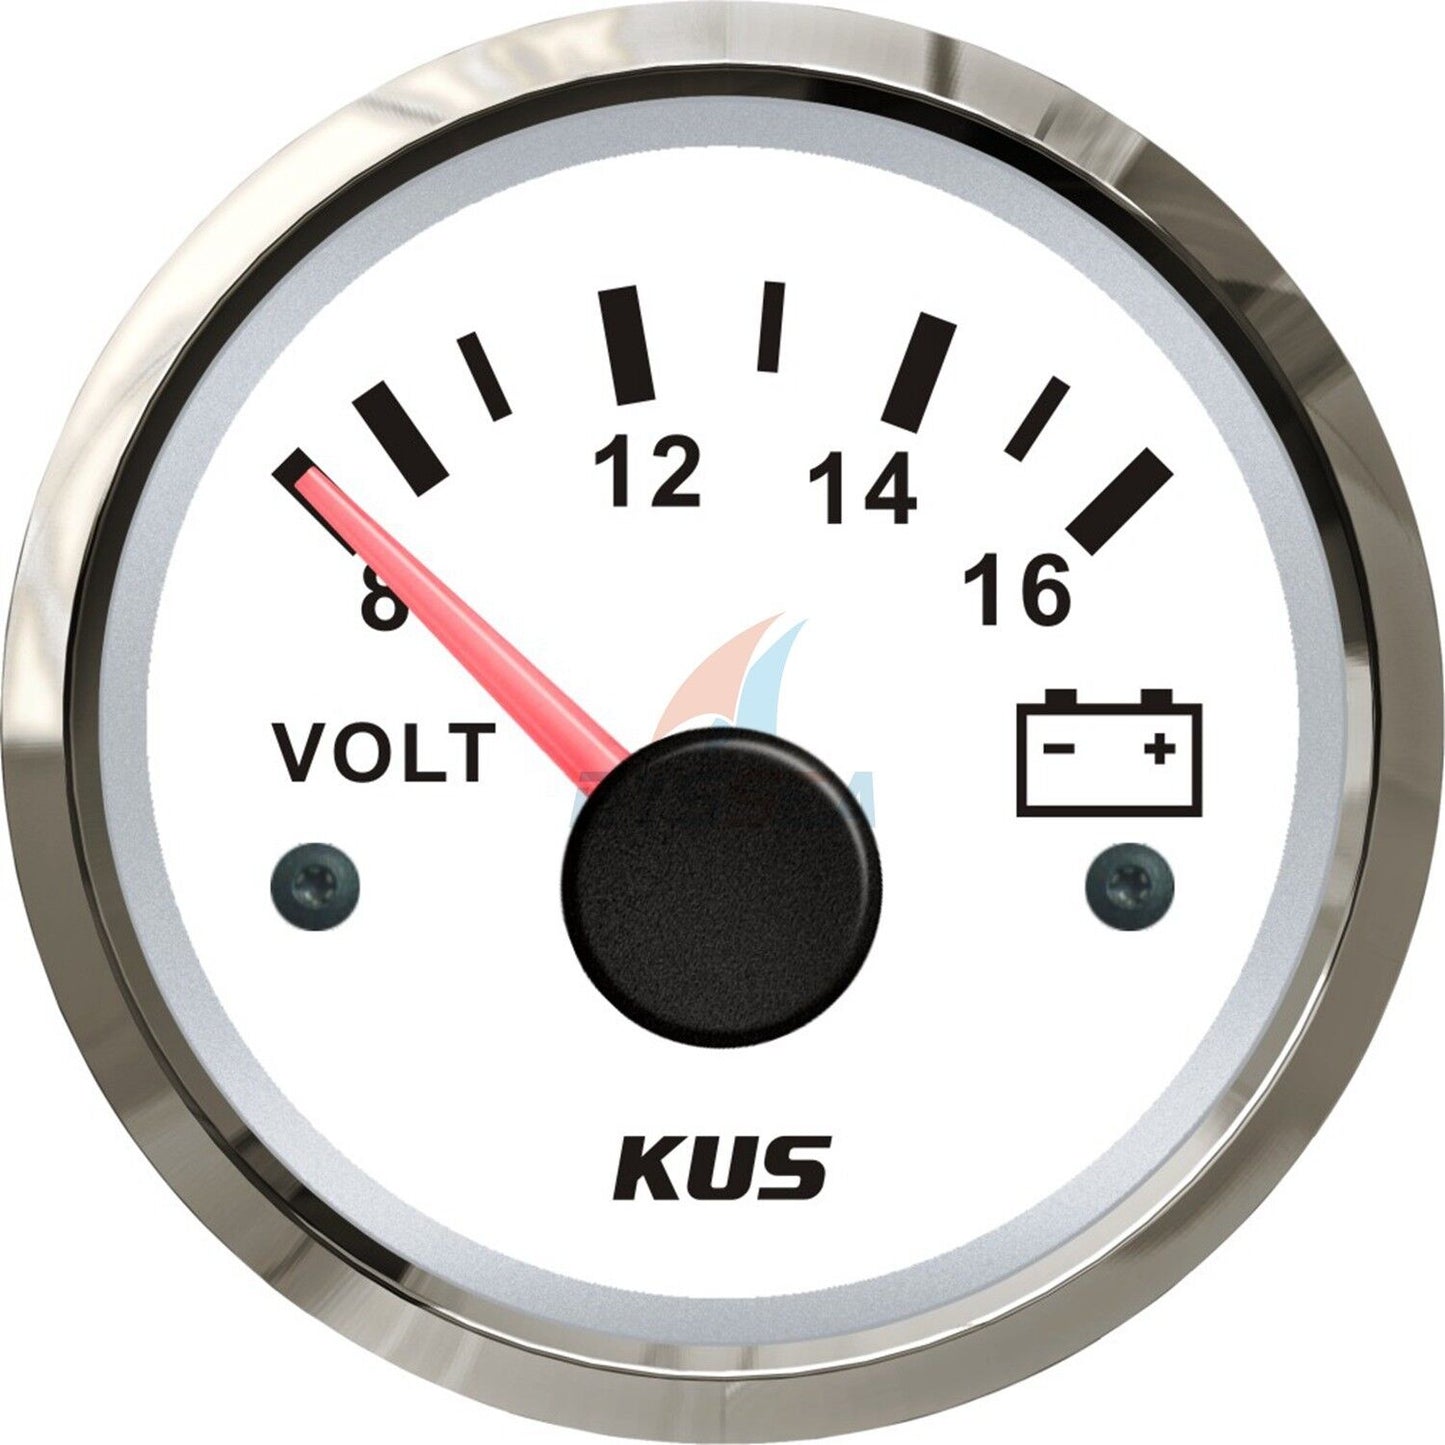 KUS Voltmeter Boat Battery Gauge Car Truck Marine Volt Indicator Range White 8-16V